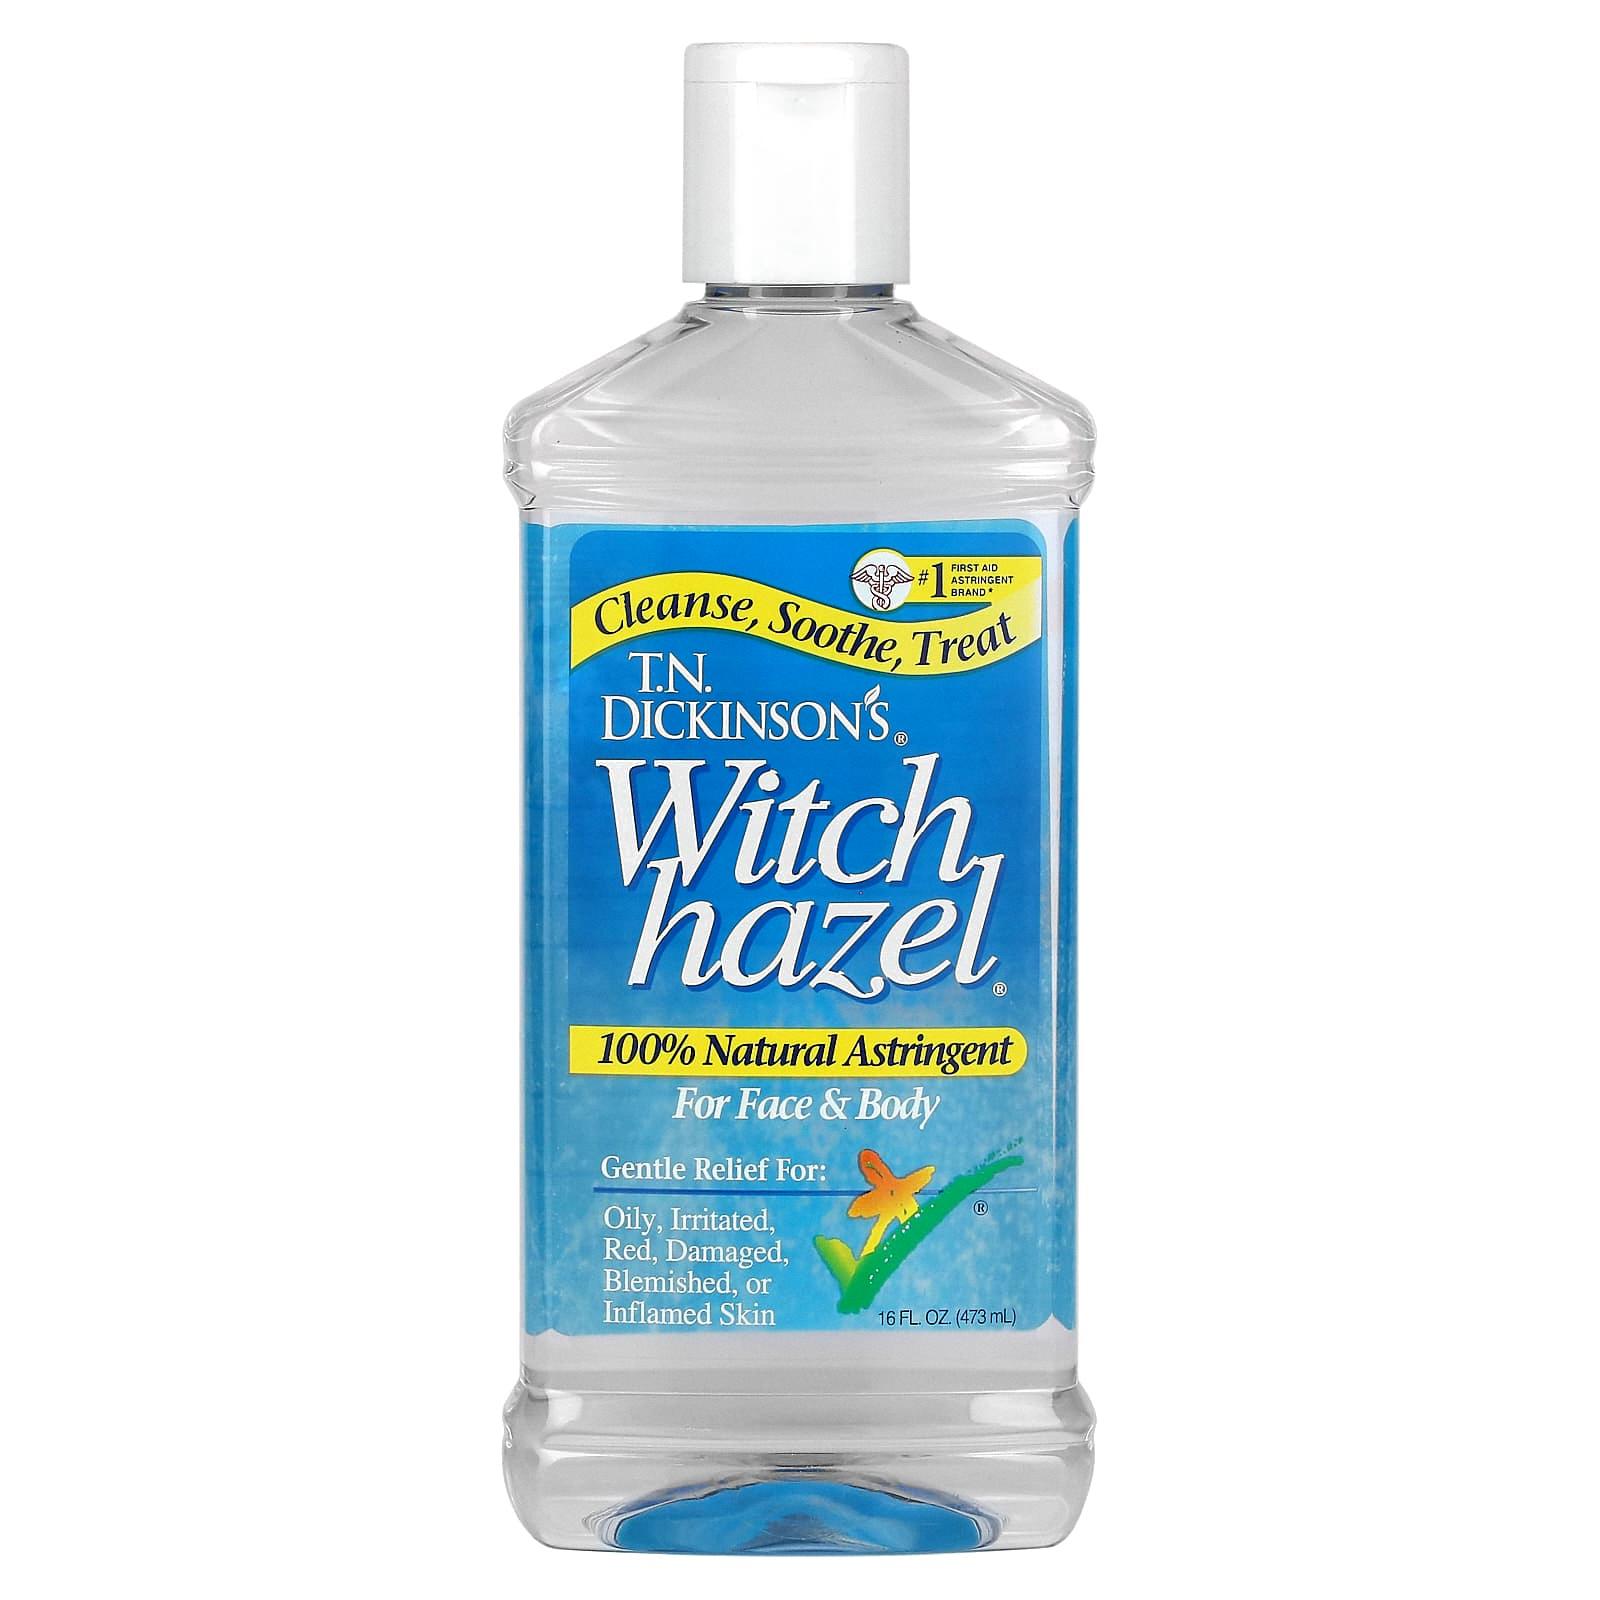 does witch hazel expire